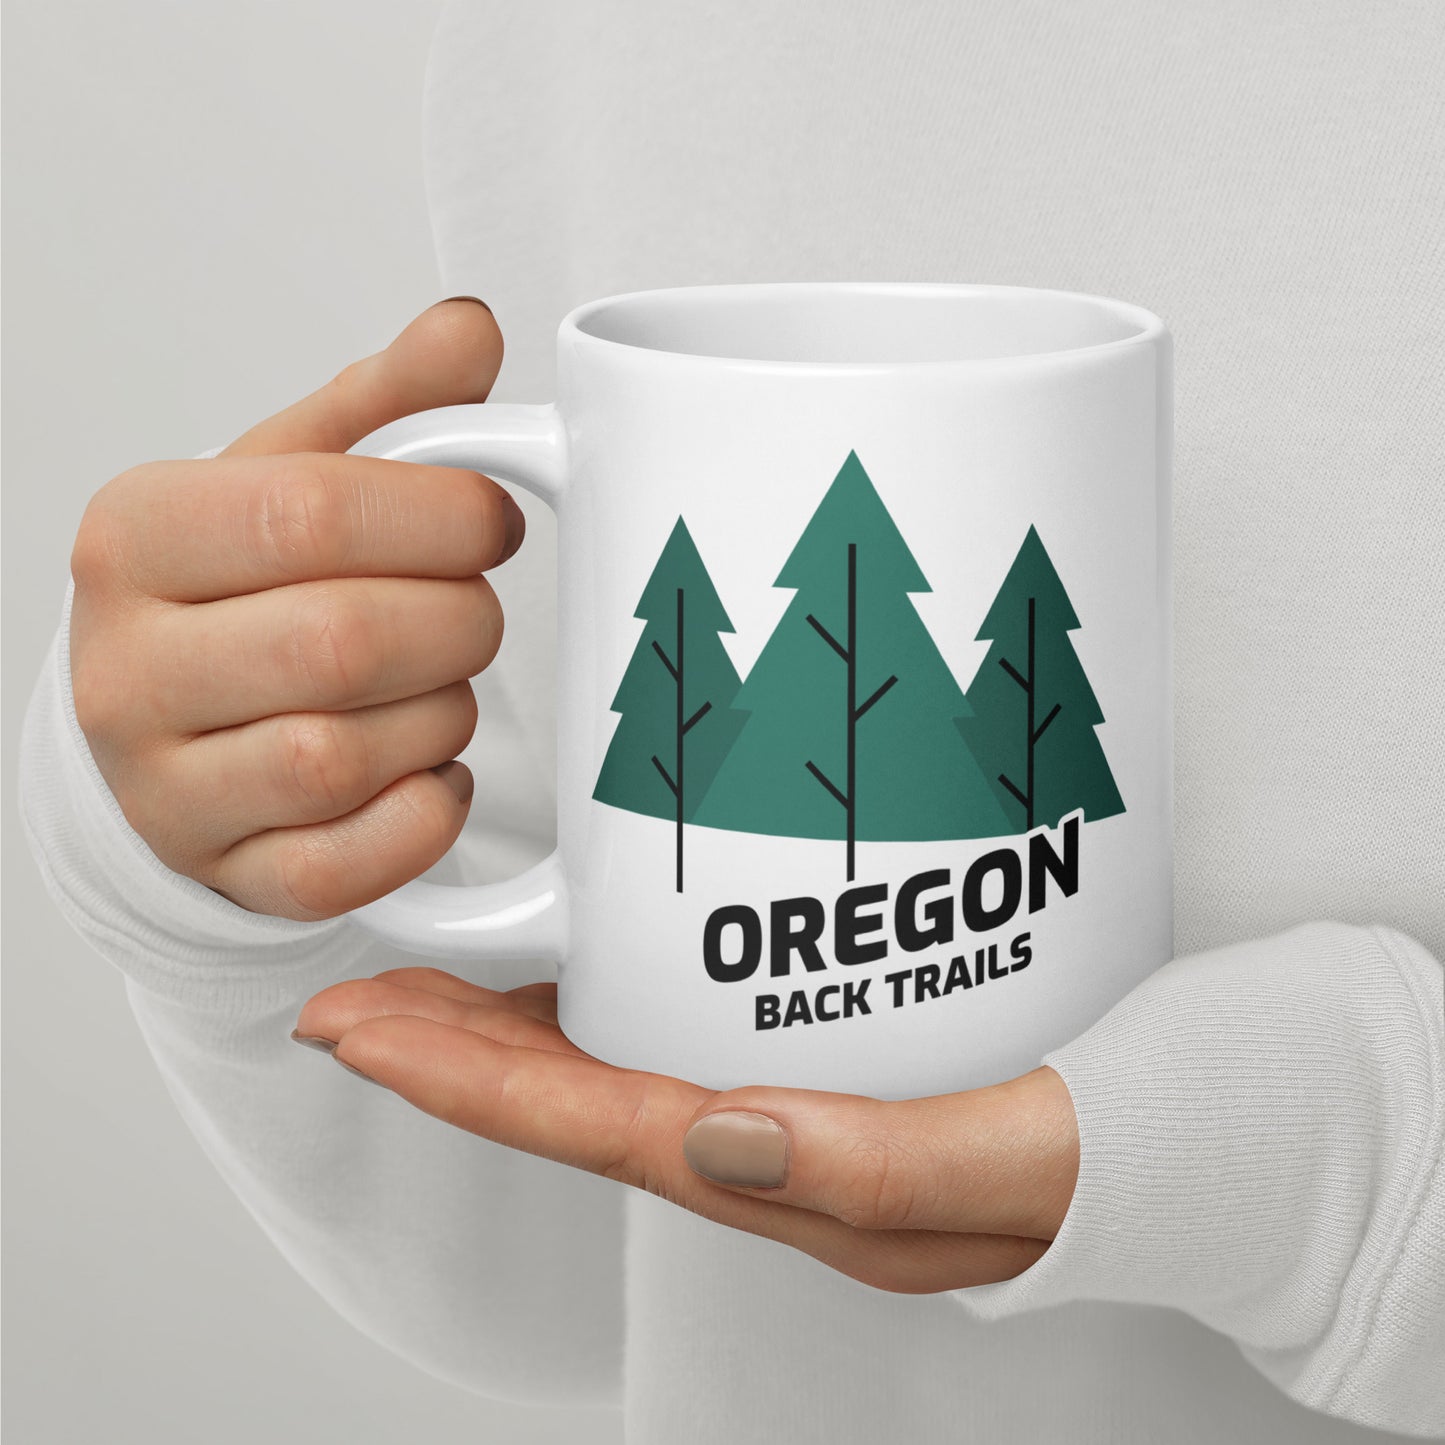 Oregon Back Trails - White glossy mug